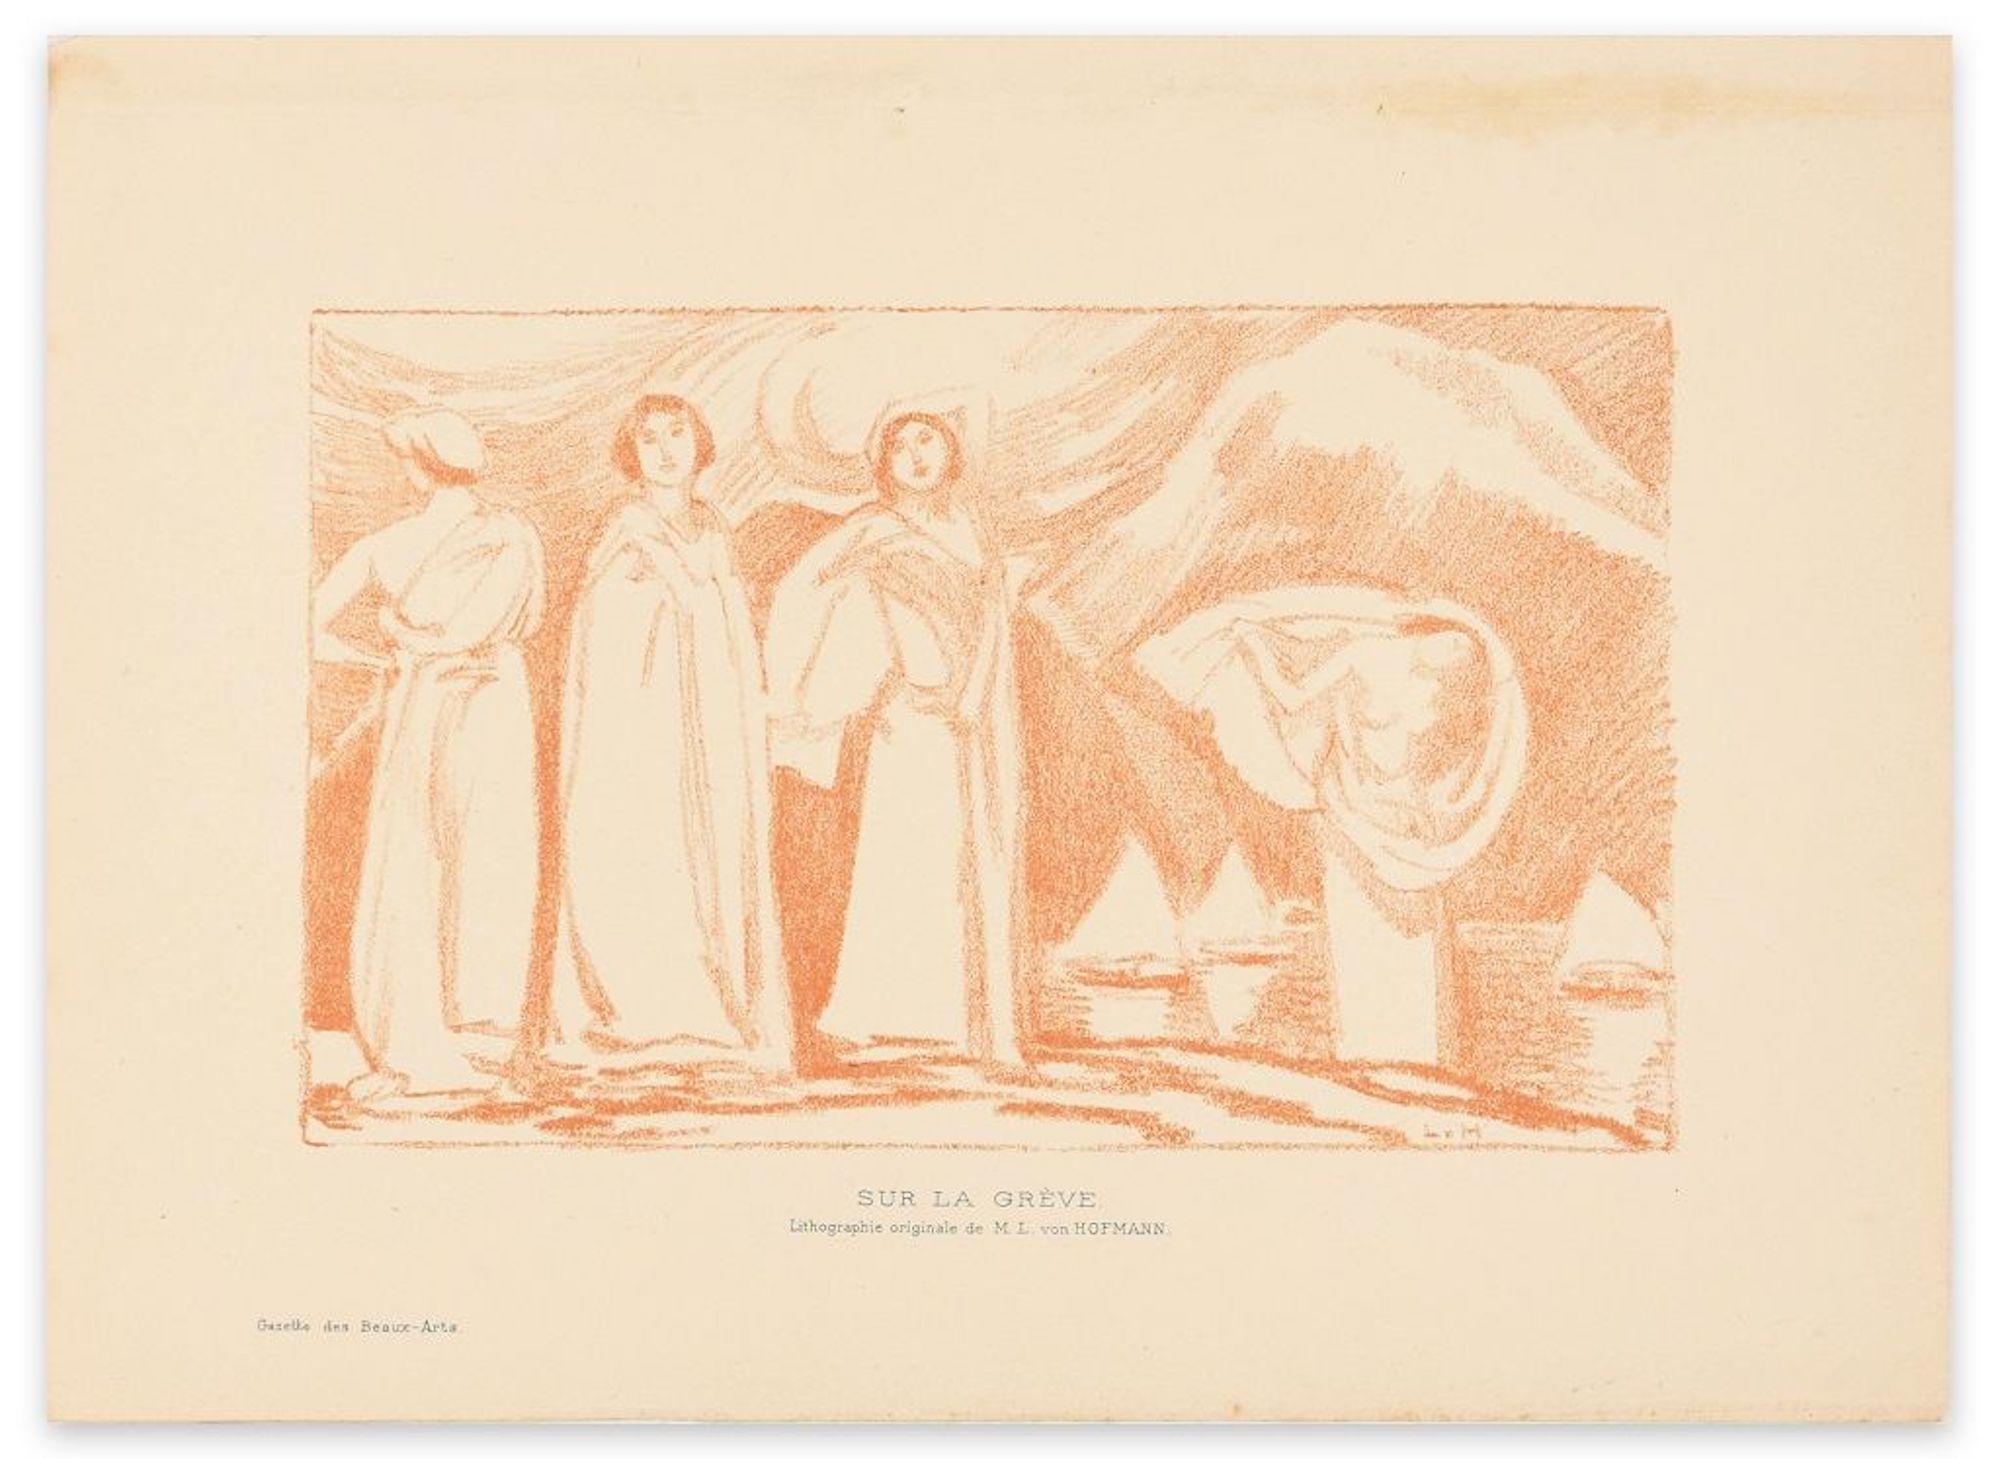 Sur la Grève - Original Lithograph by L. von Hoffmann - 1910 ca. - Print by Ludwig von Hoffmann